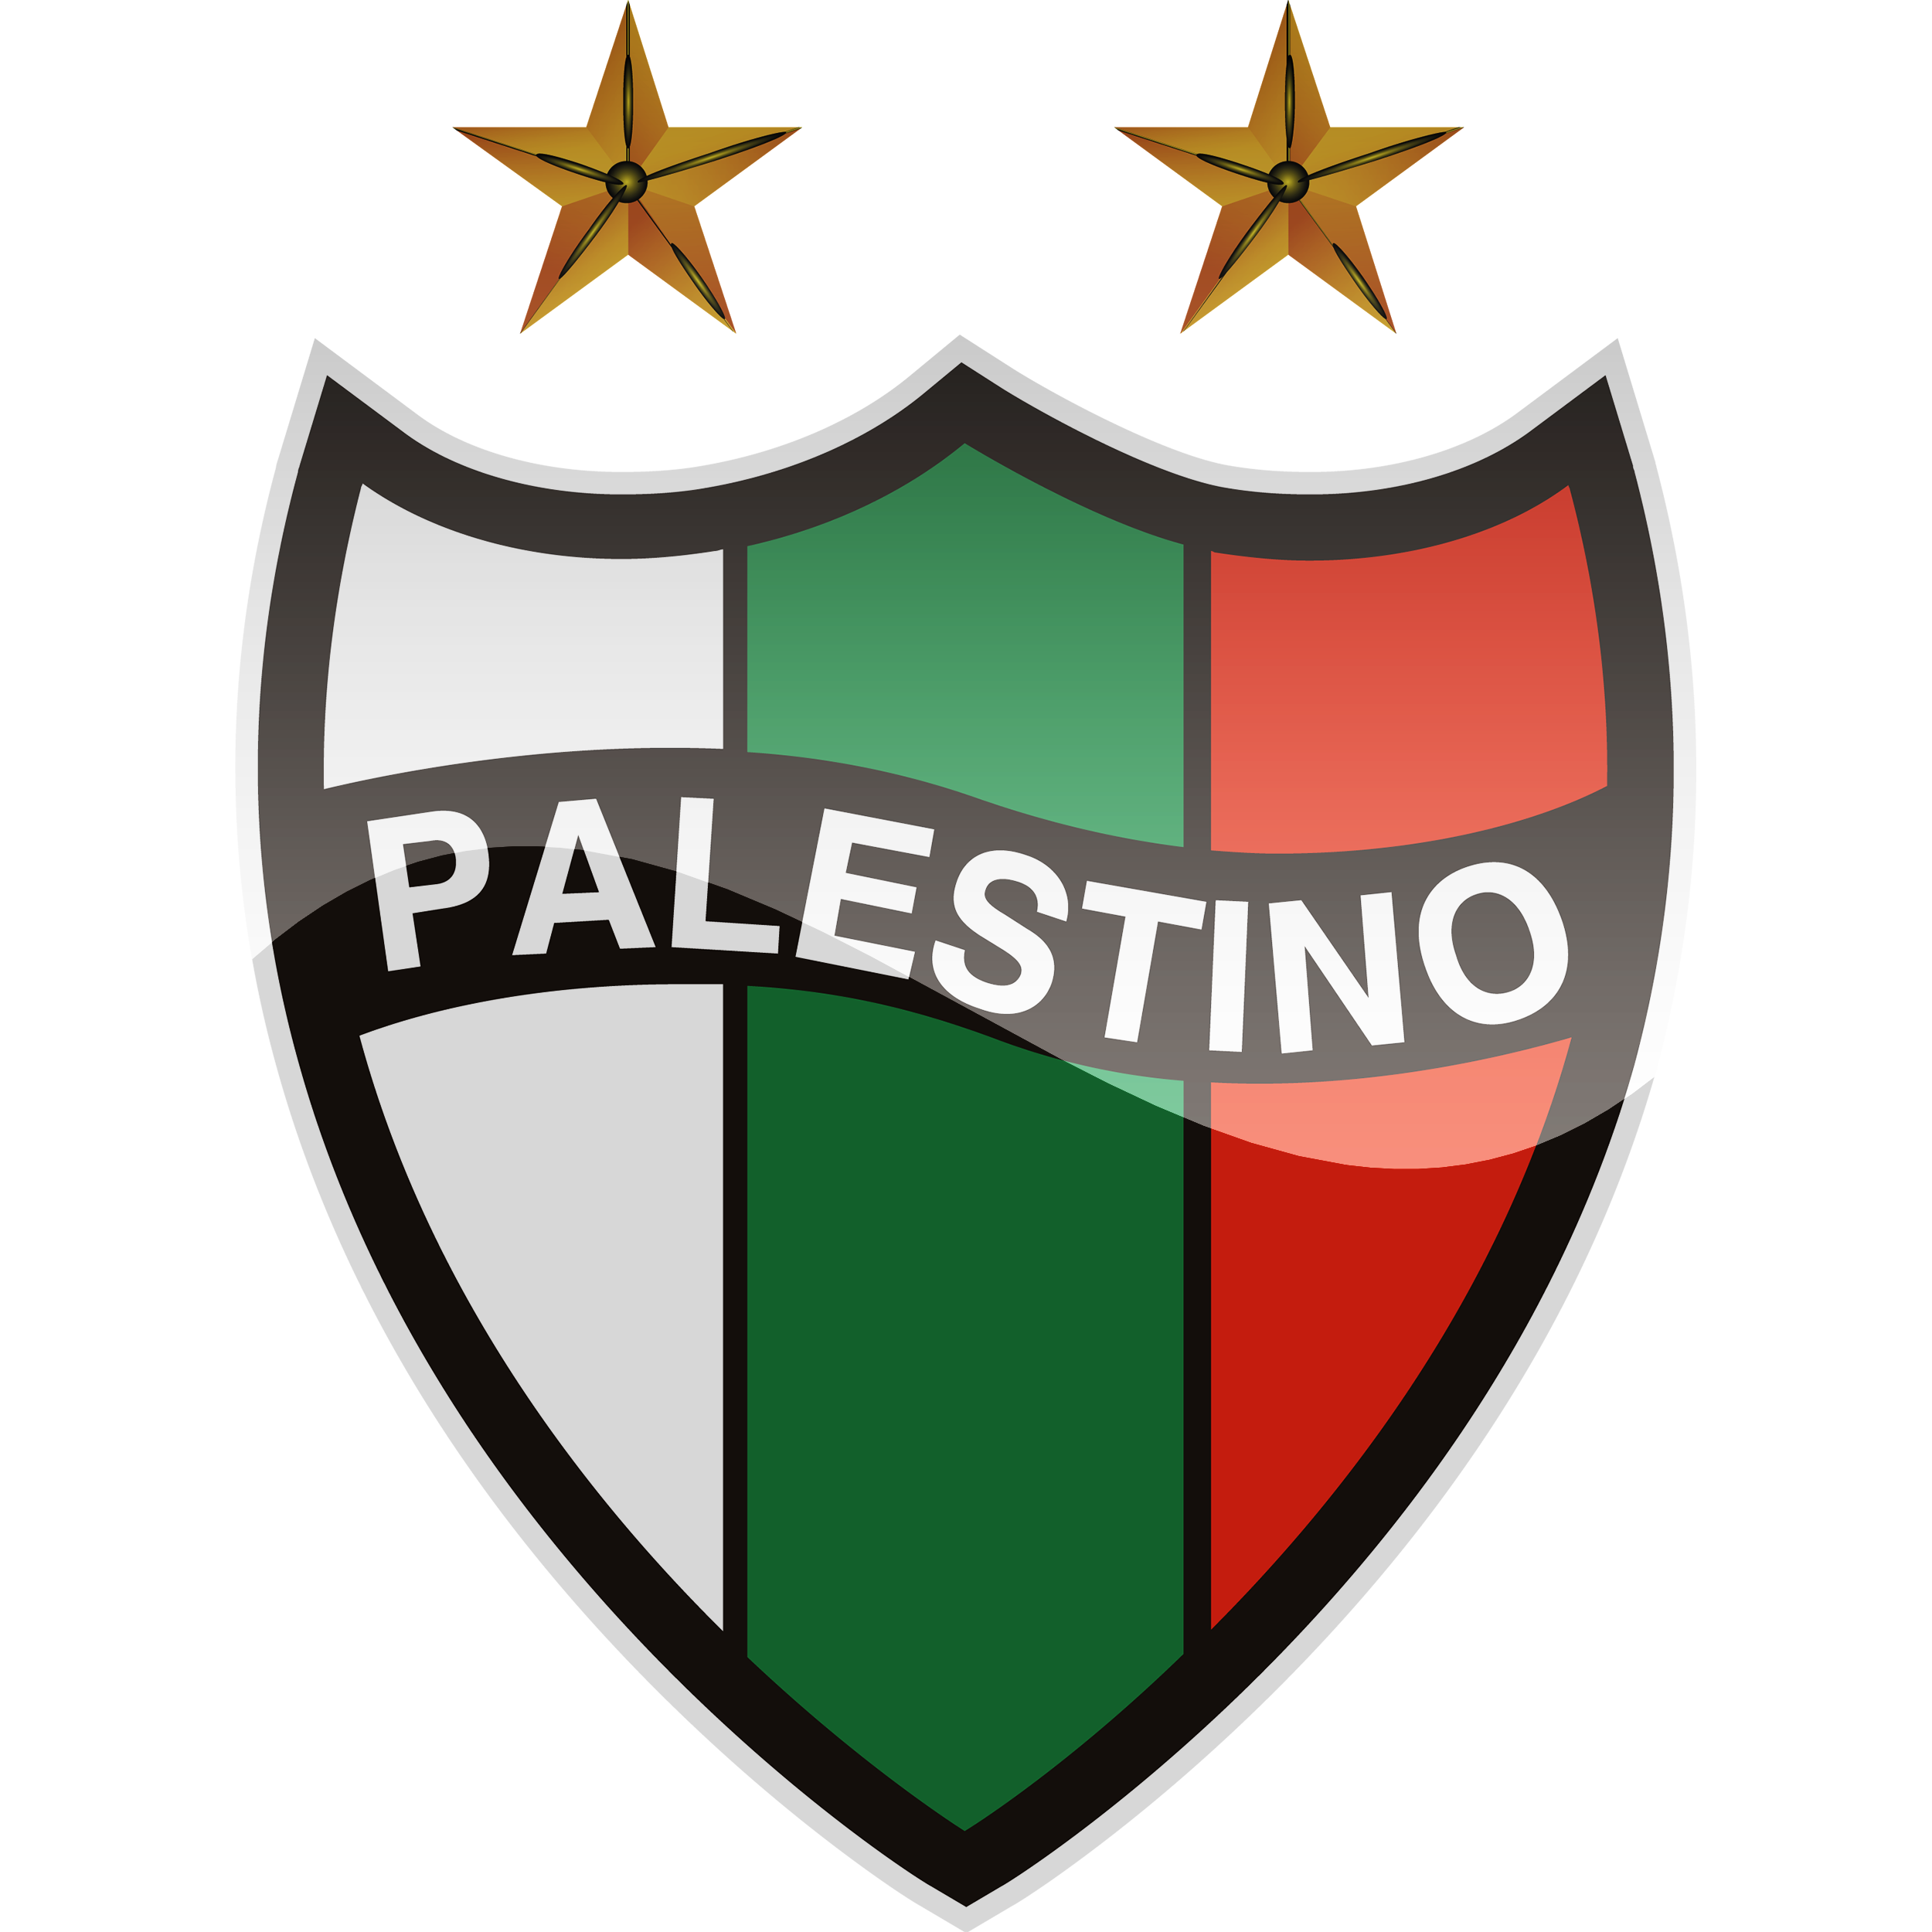 Palestino vs Huachipato Prediction: We expect a defensive performance